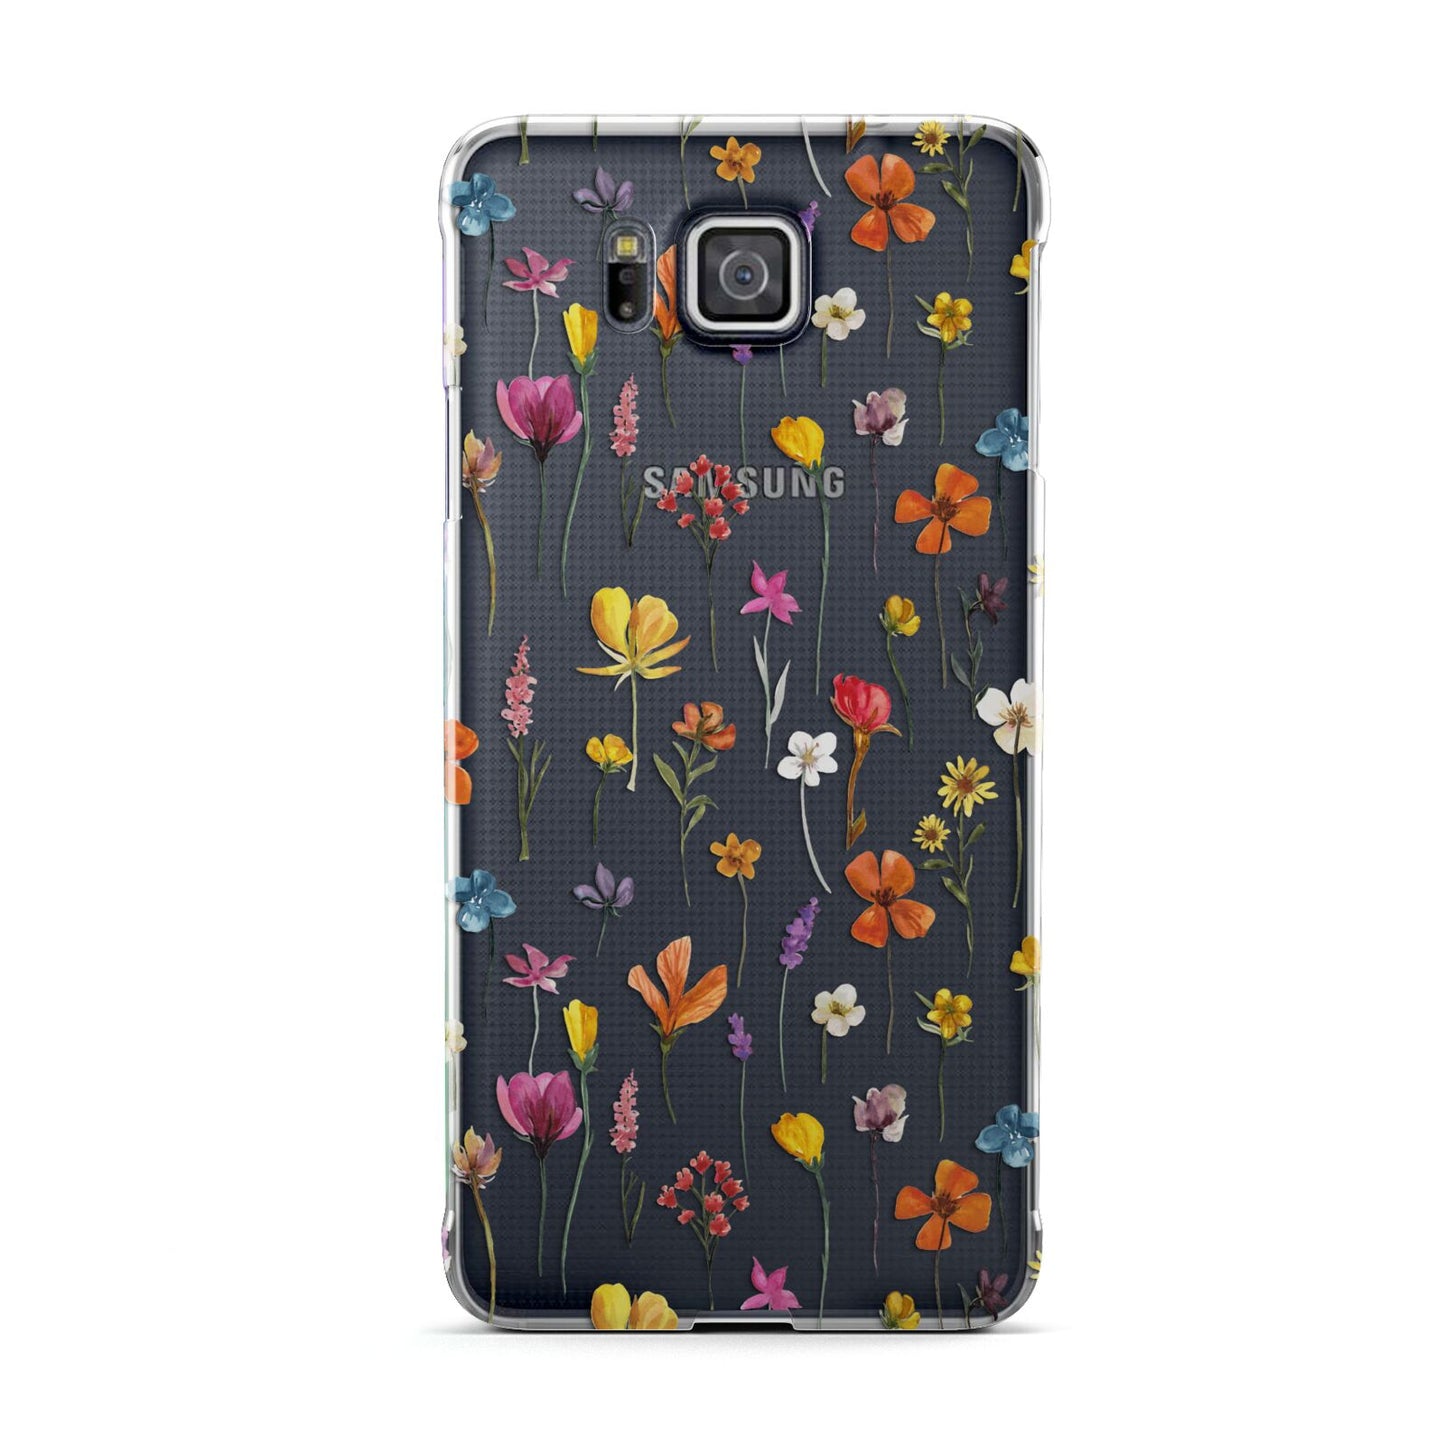 Botanical Floral Samsung Galaxy Alpha Case